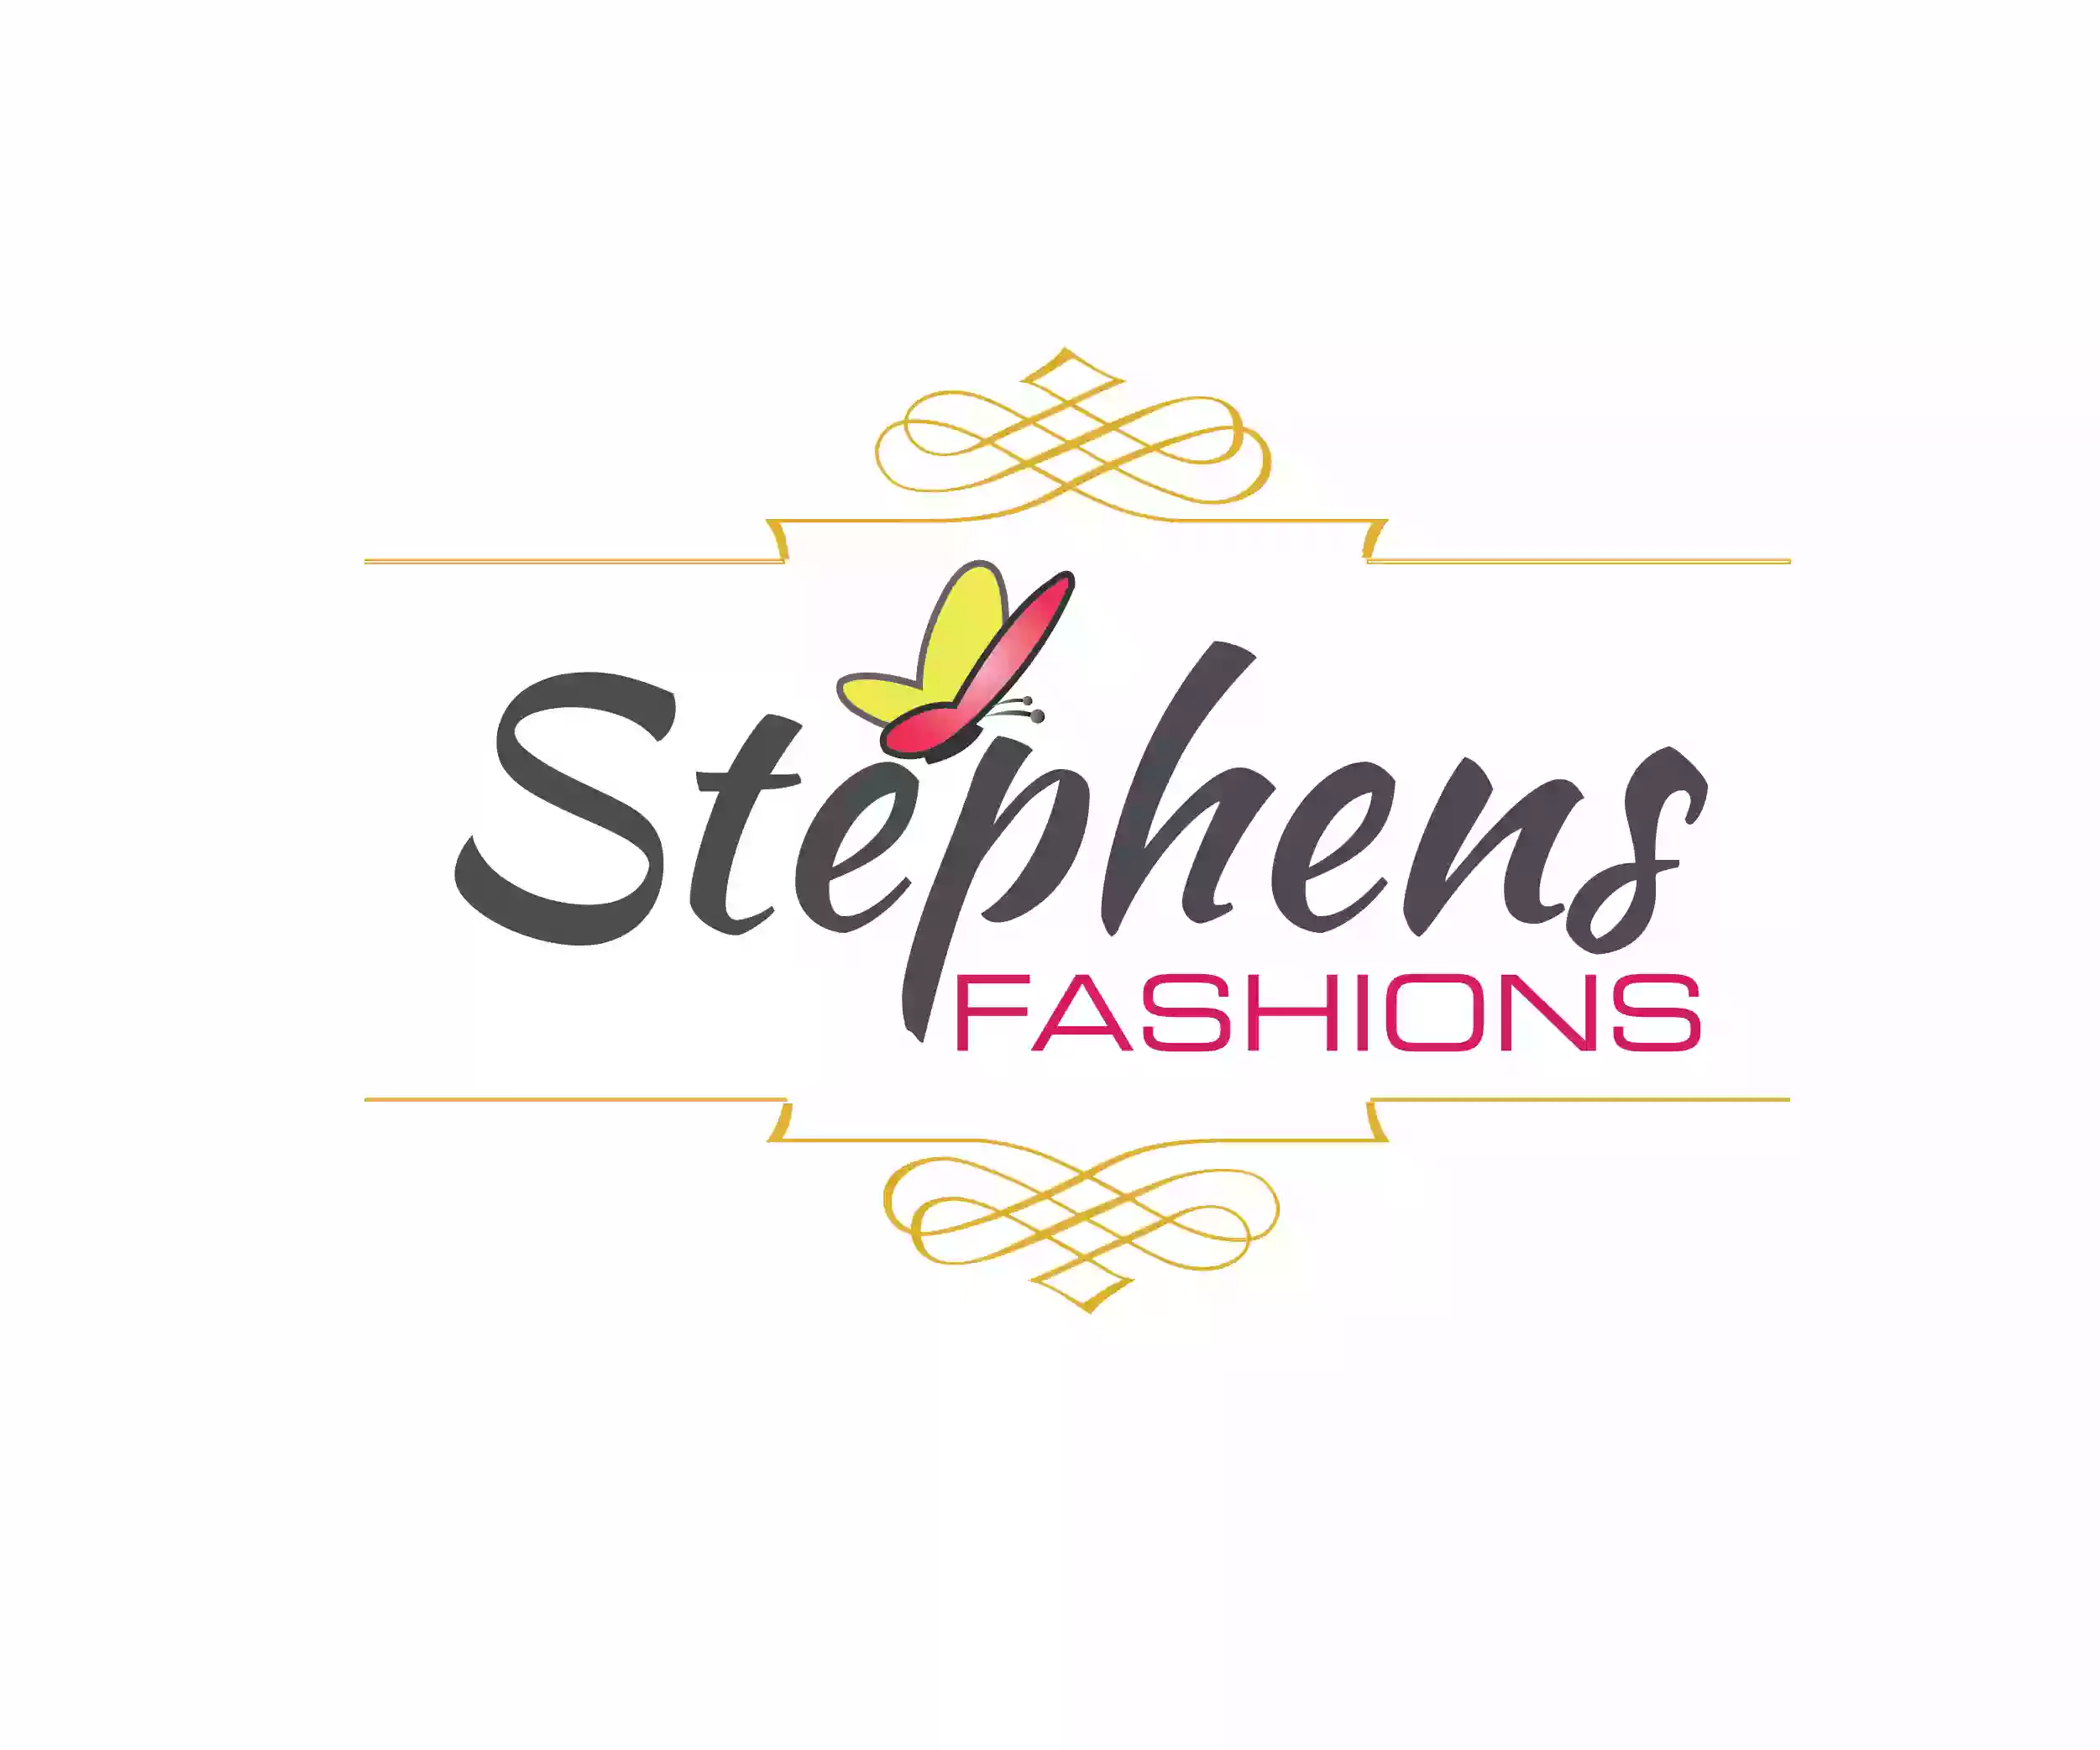 Stephen's Fashions